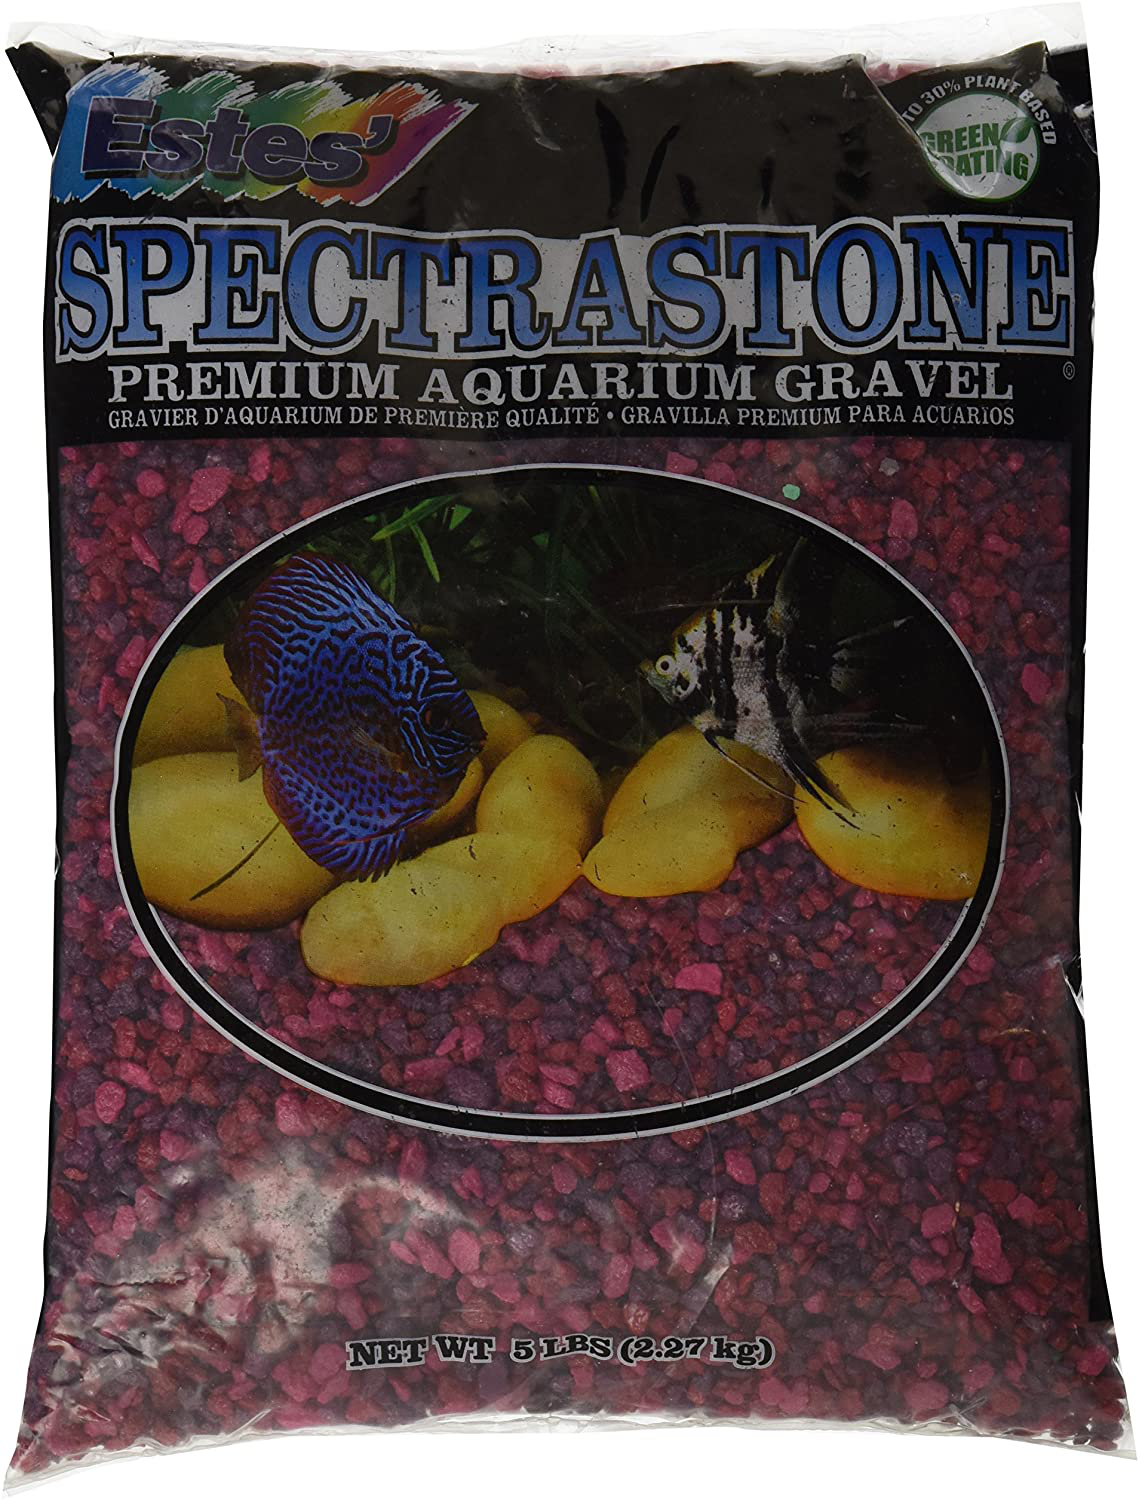 Spectrastone Berry Lake Aquarium Gravel for Freshwater Aquariums, 5-Pound Bag